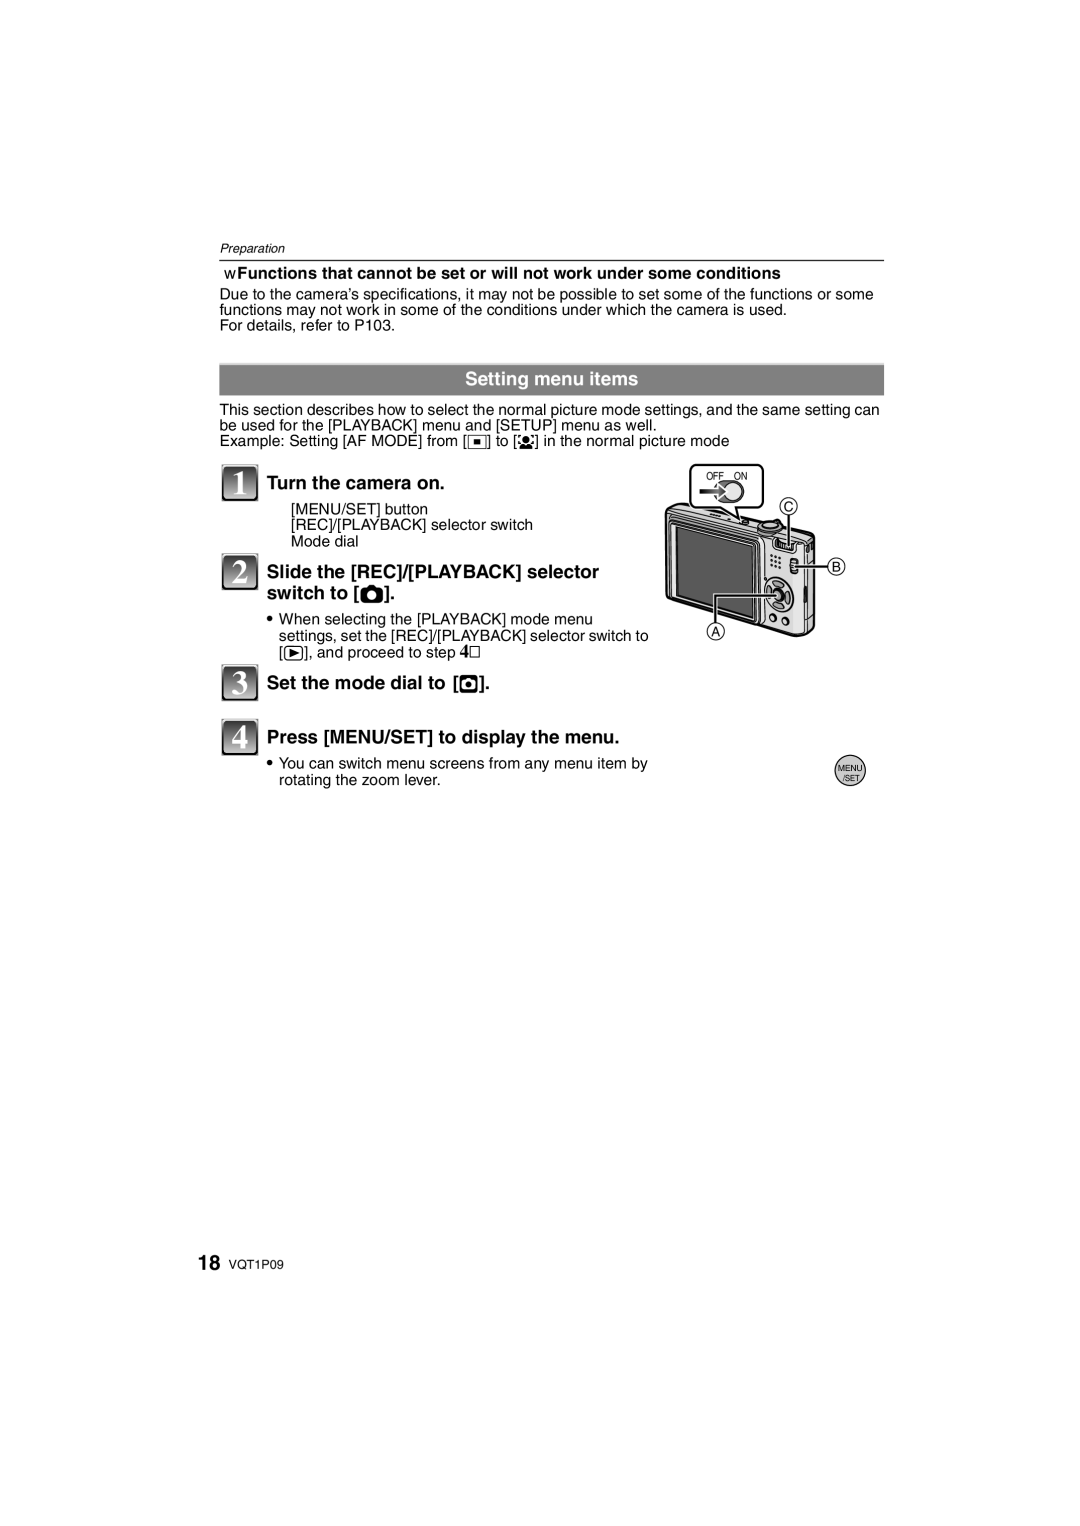 Panasonic DMC-FX35 operating instructions Setting menu items, Slide the REC/PLAYBACK selector switch to 